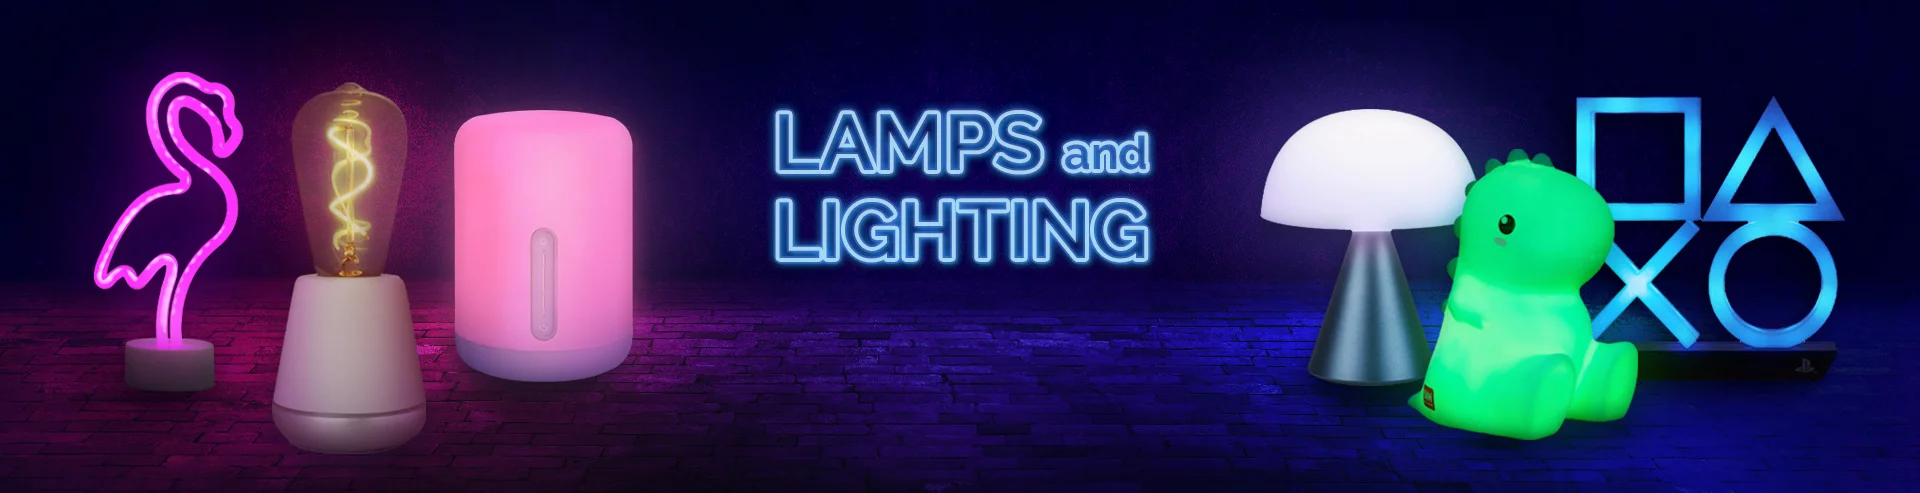 VM-Hero-Lamps & Lighting-1920x493.webp